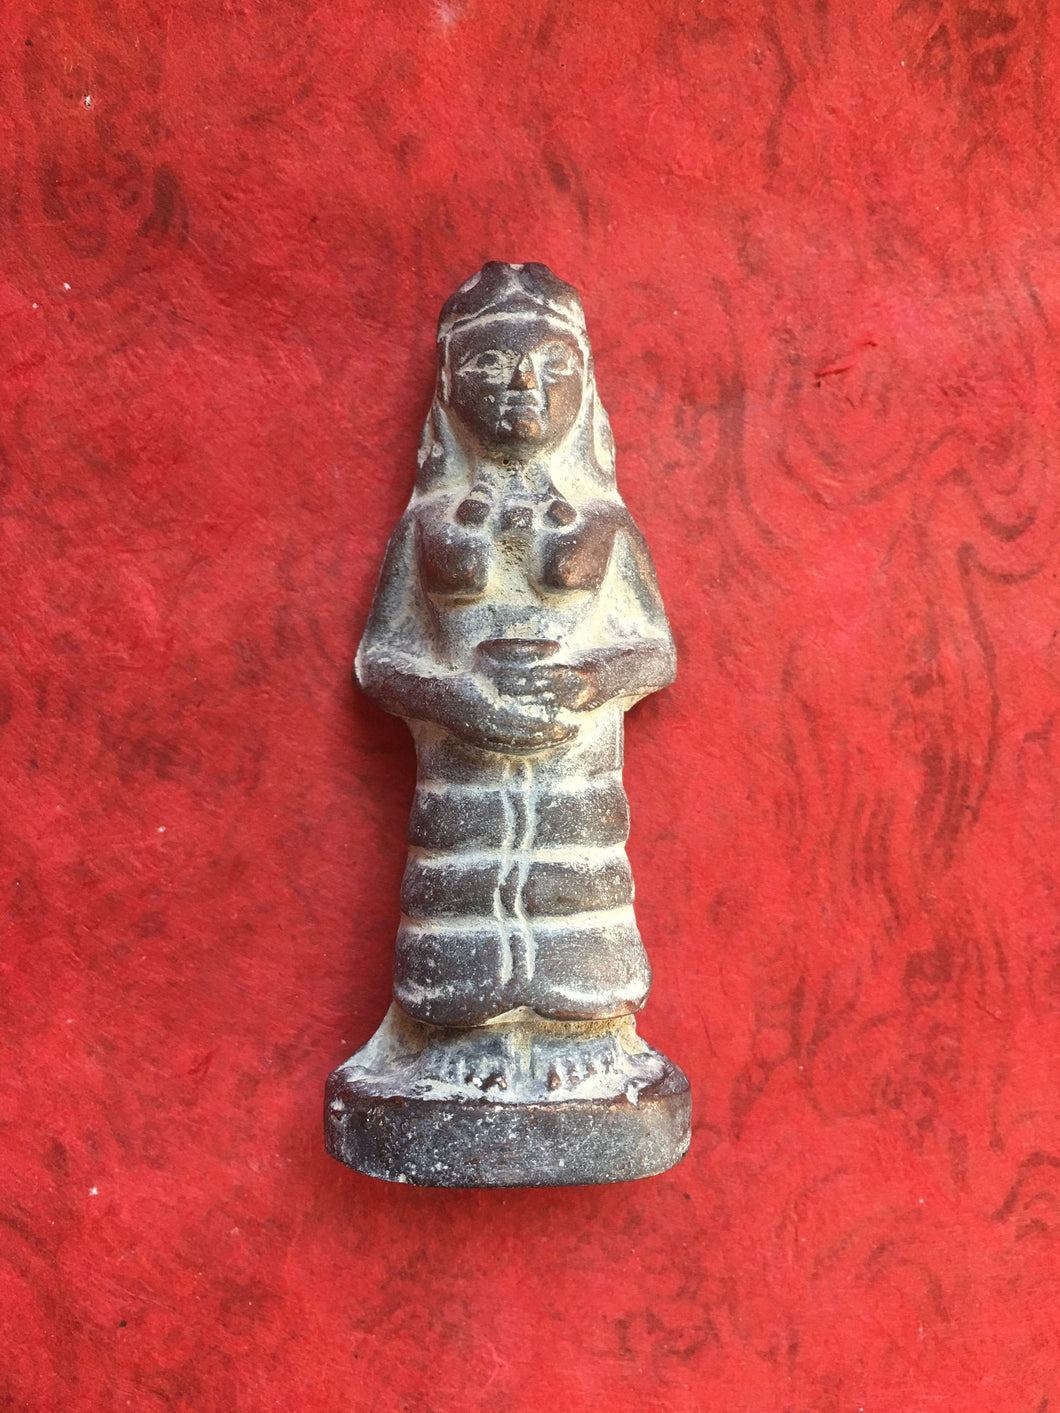 Ishtar Goddess holding a vase, Small Ishtar statue. Sumerian gift